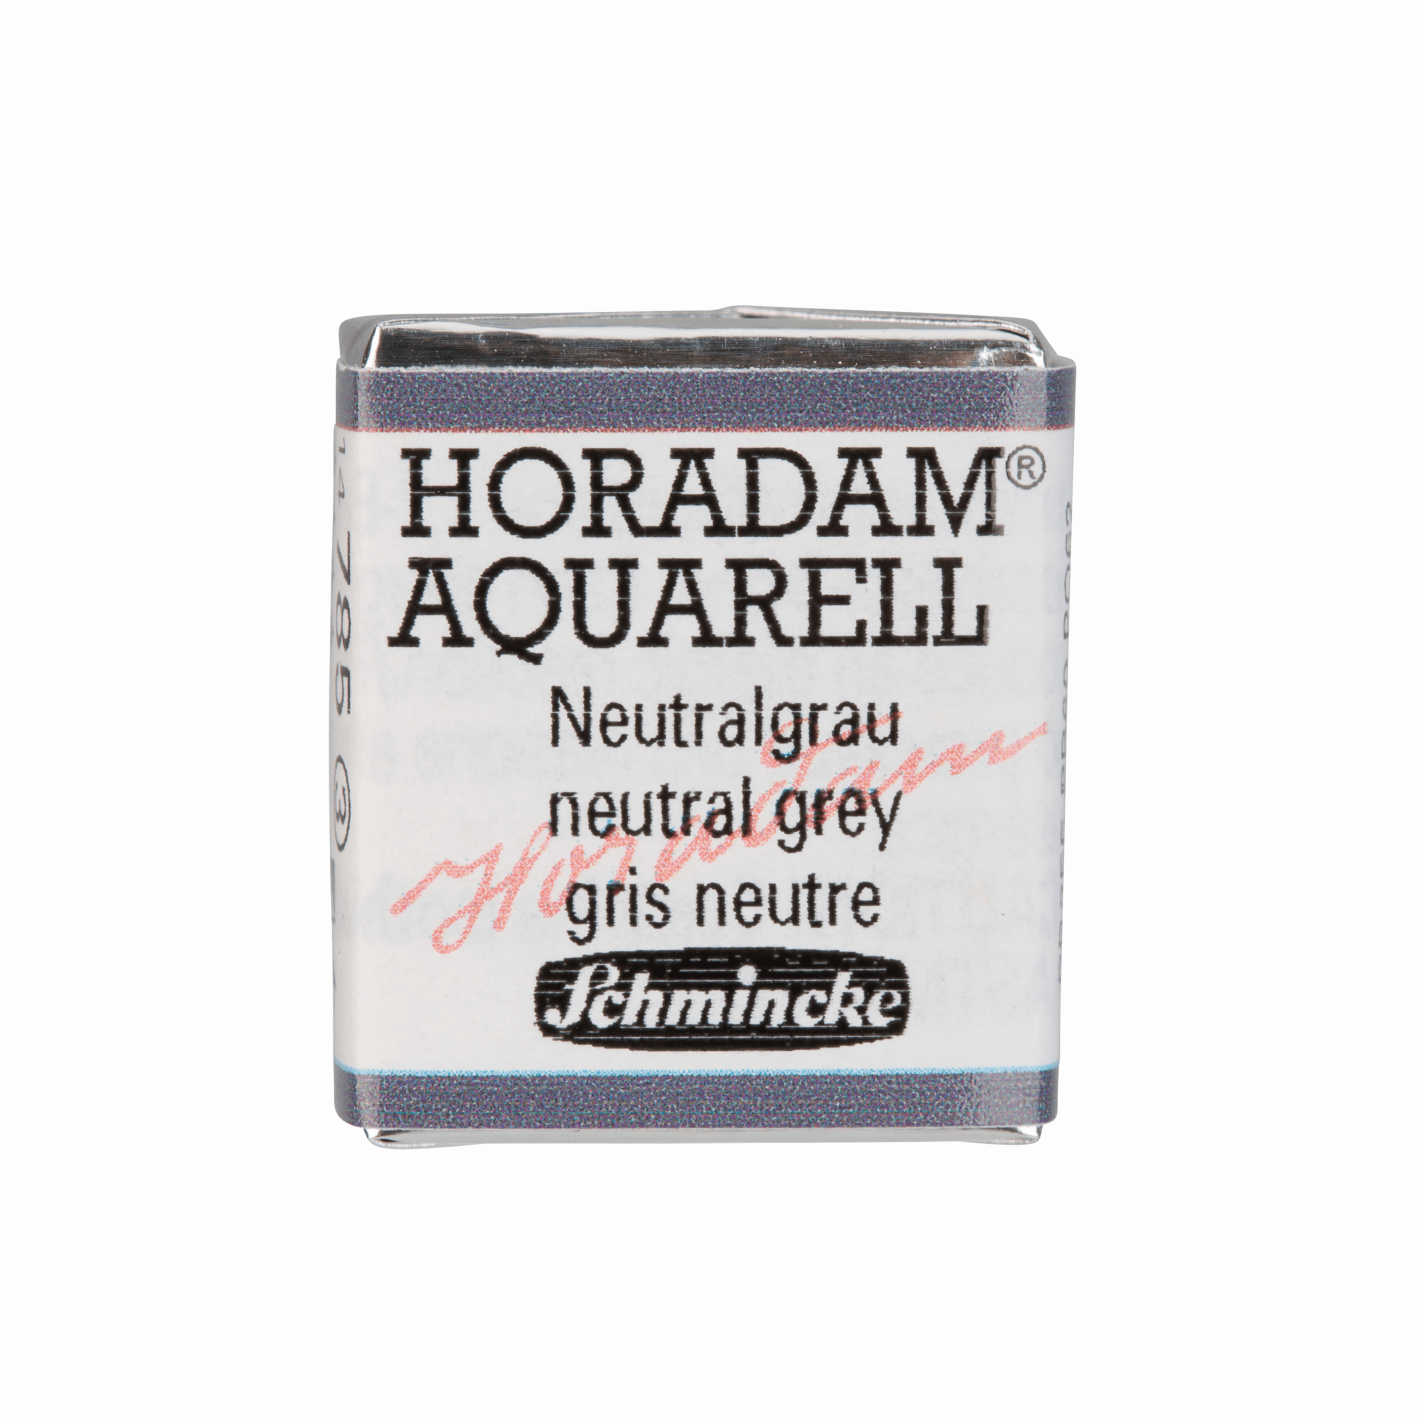 Schmincke Horadam Aquarell pans 1/2 pan Neutral Grey